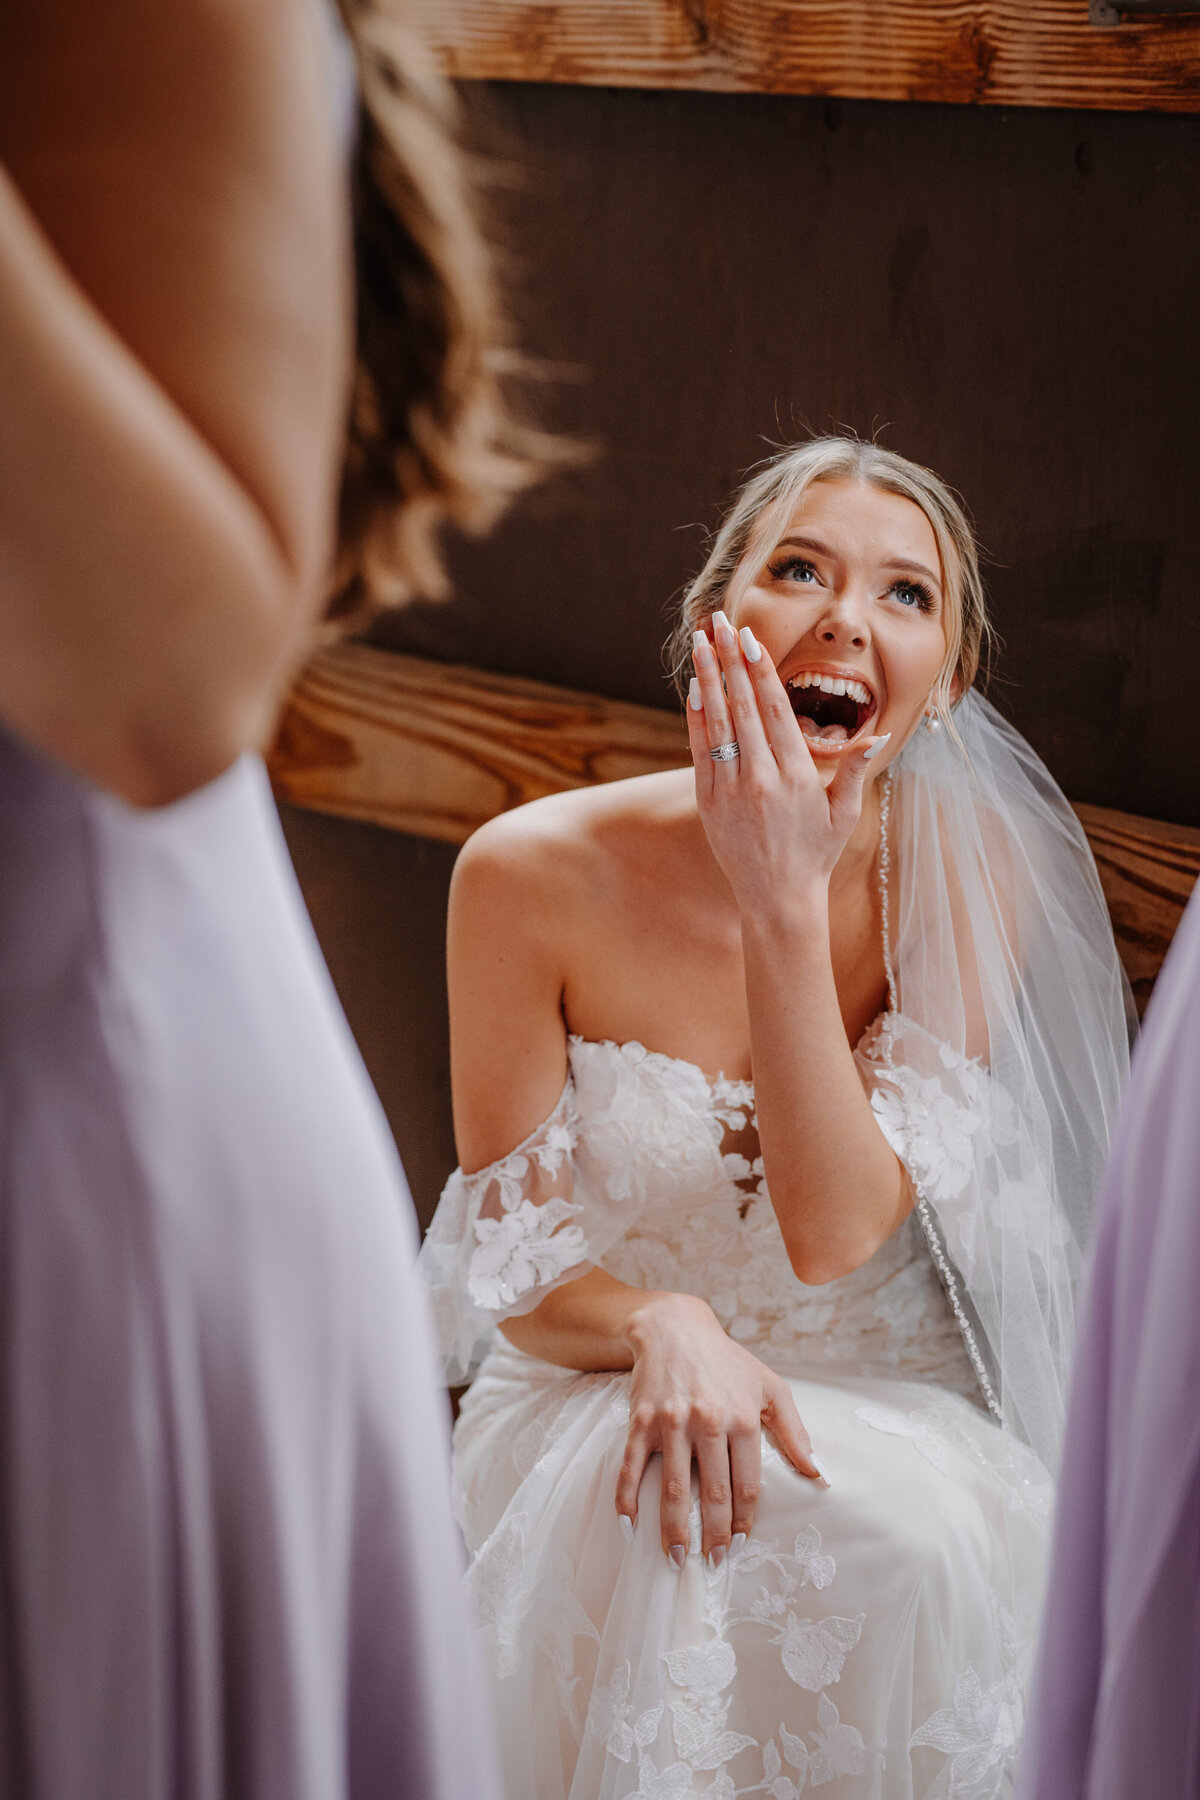 Bride in wedding dress sitting laughing